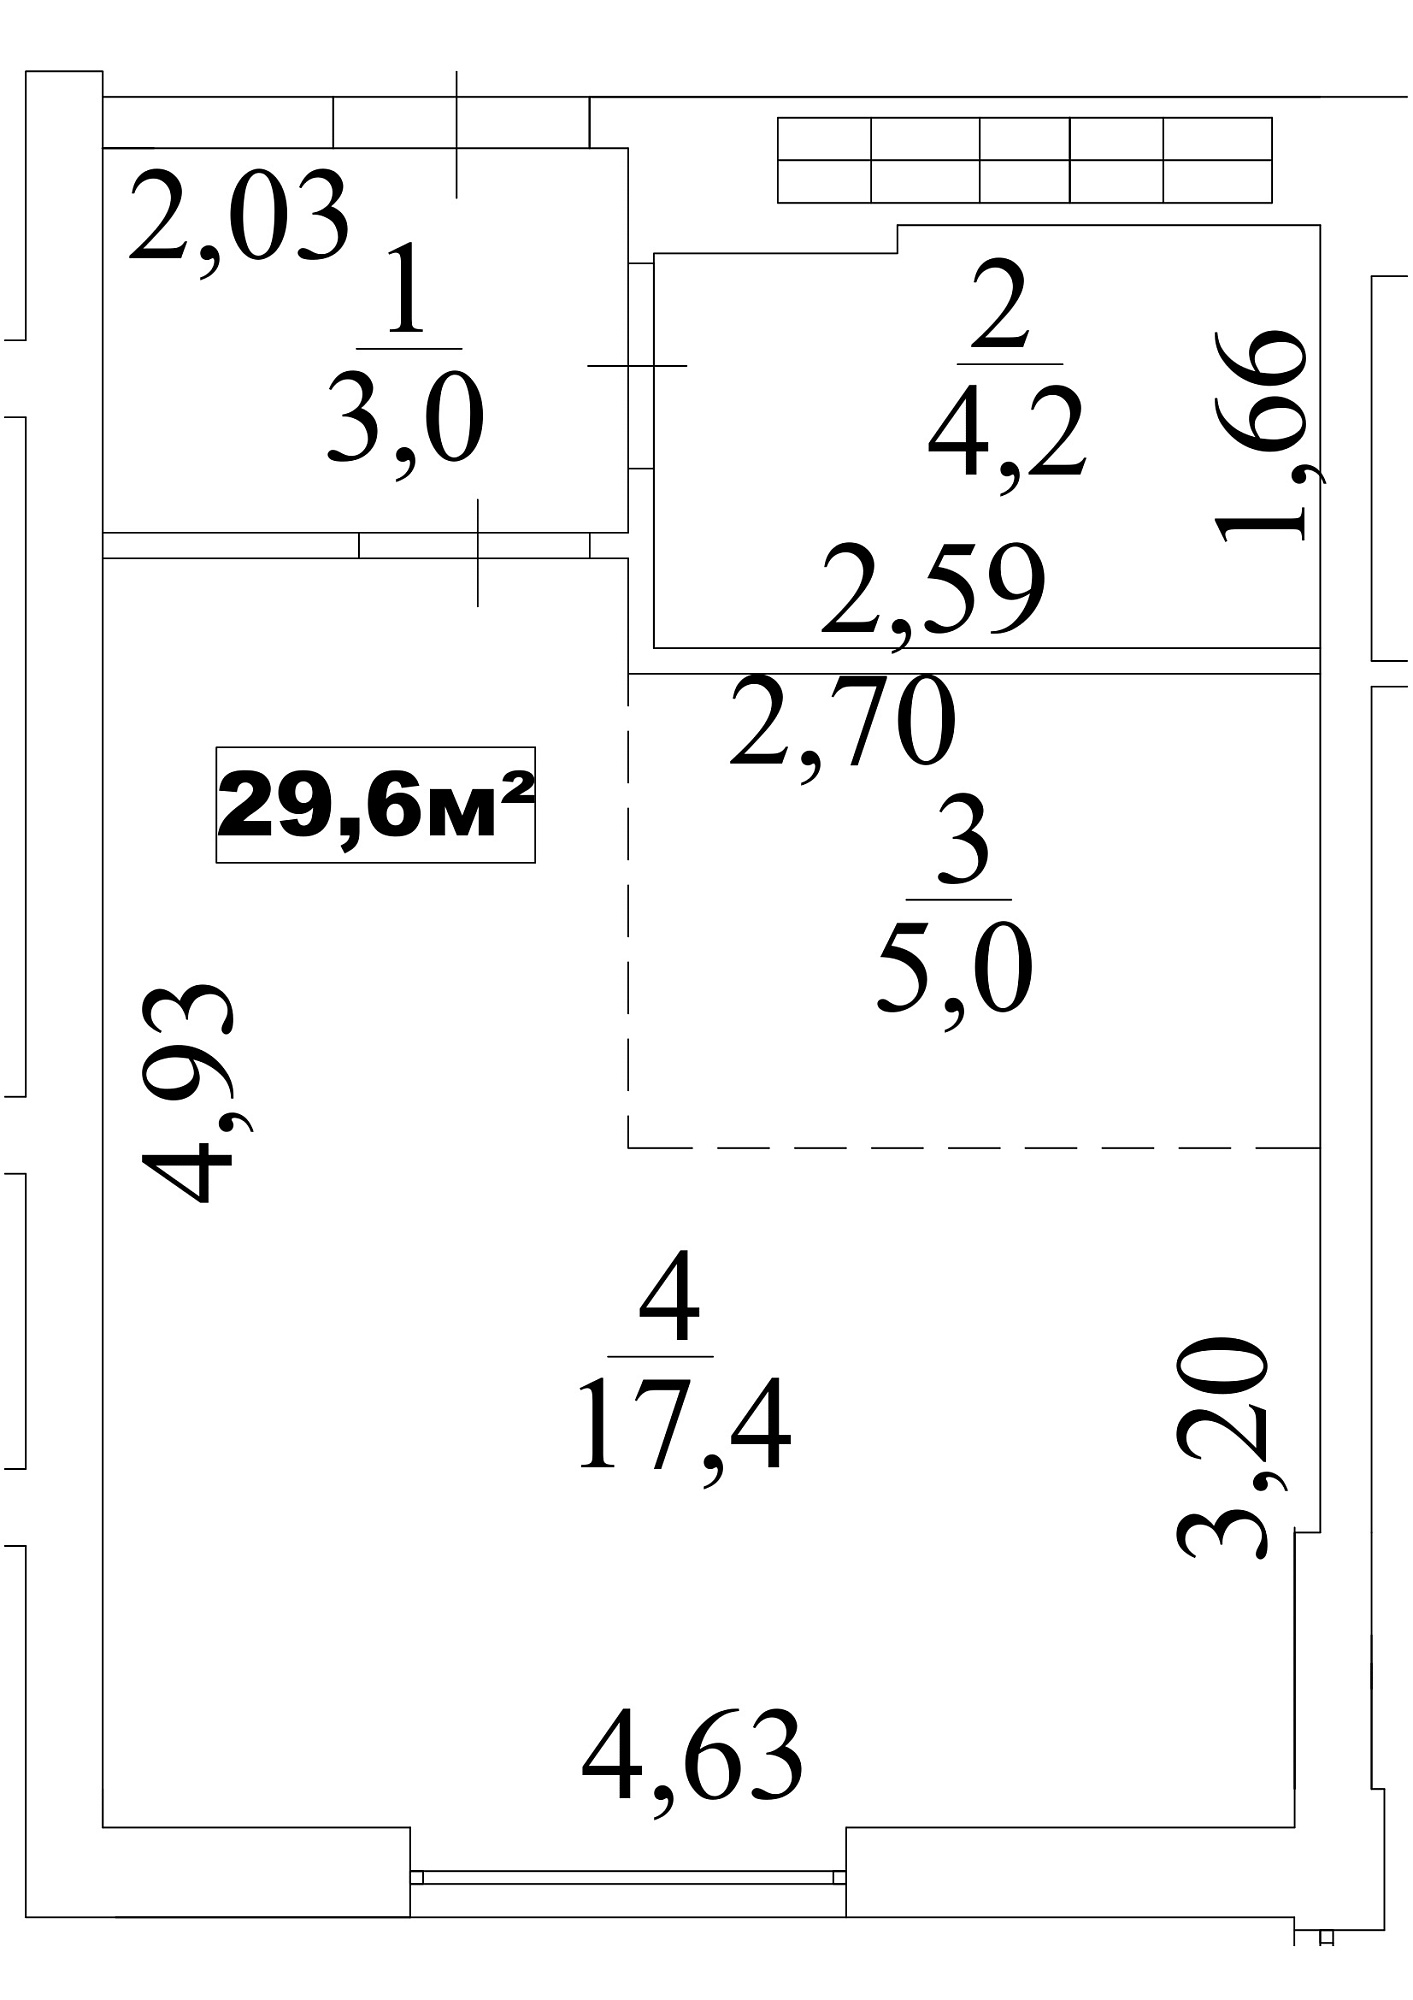 Planning Smart flats area 29.6m2, AB-10-05/00045.